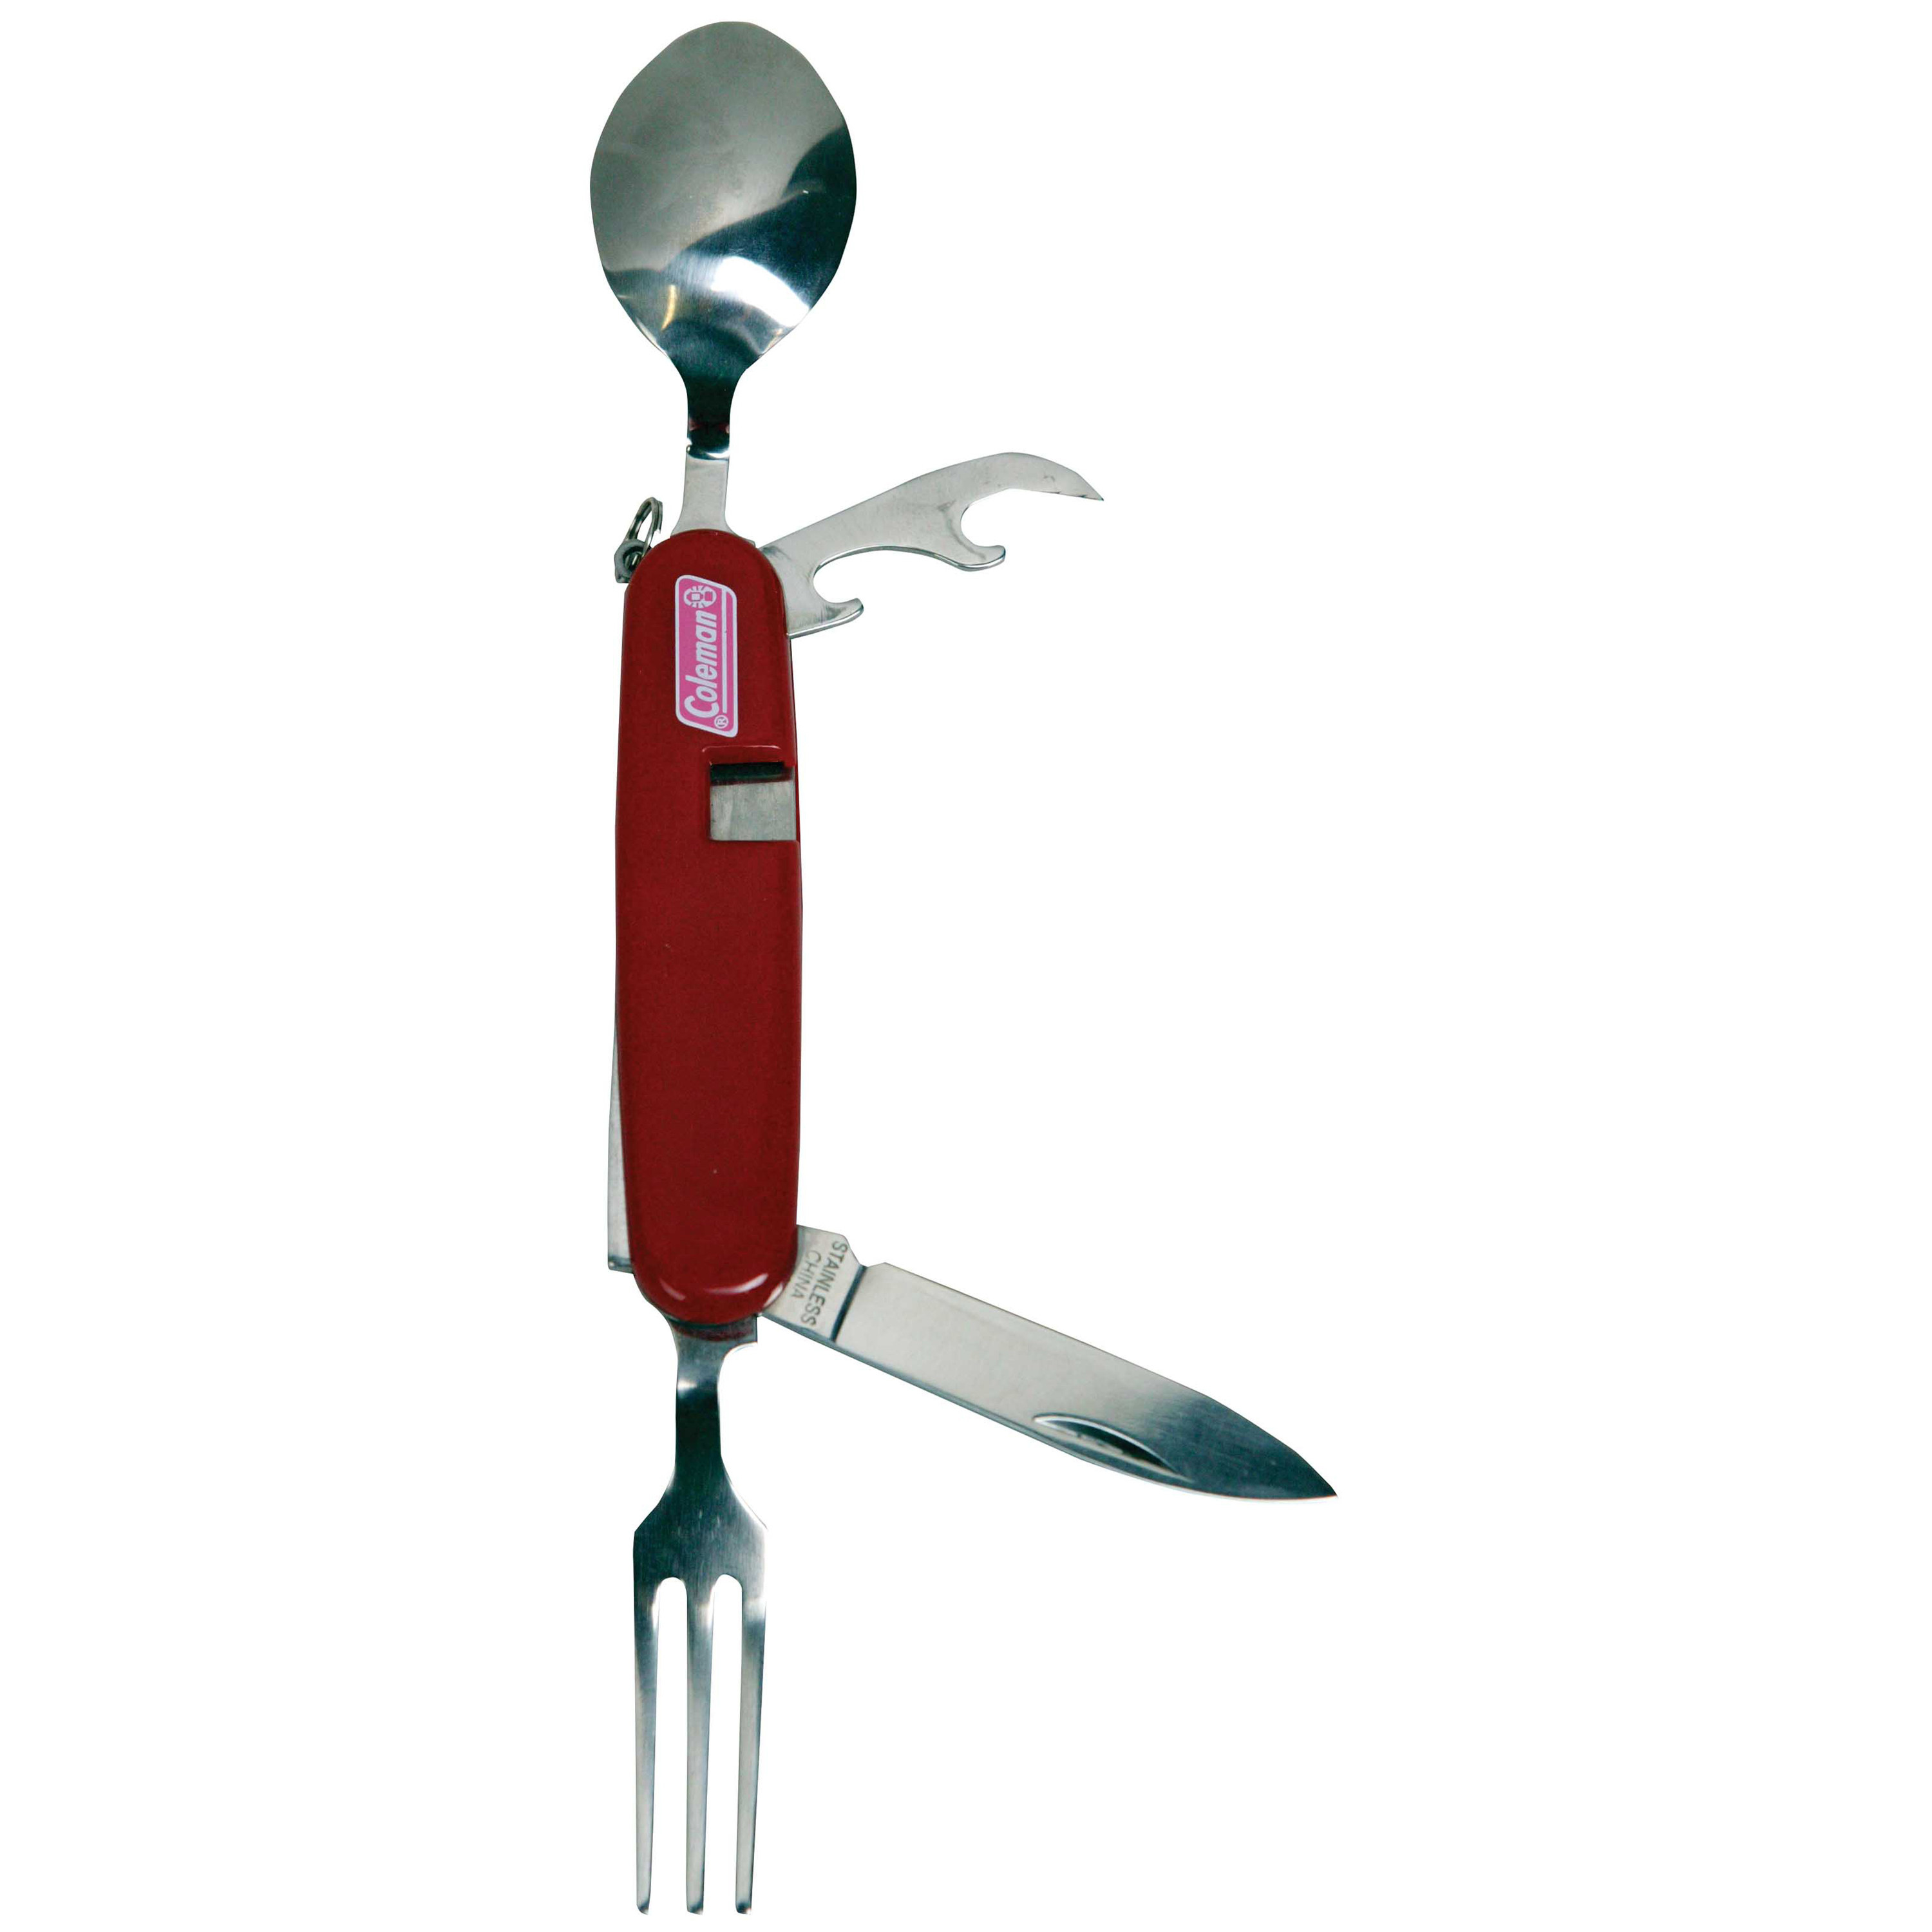 Red Coleman camping utensil set